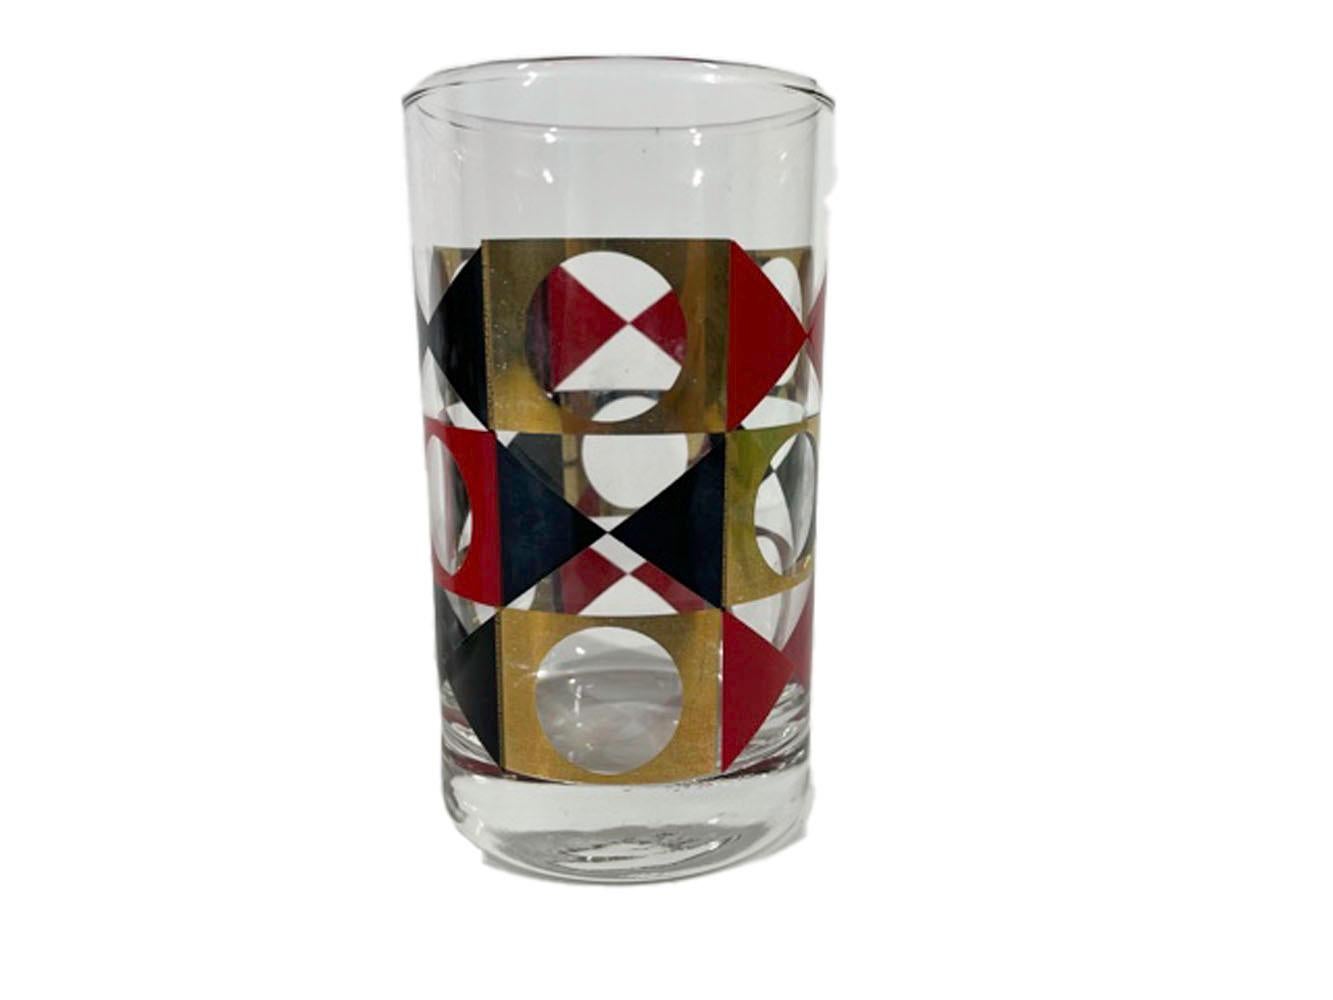 Set of 6 Vintage Geometric Cocktail Glasses in Red & Black Enamel with 22k Gold For Sale 1